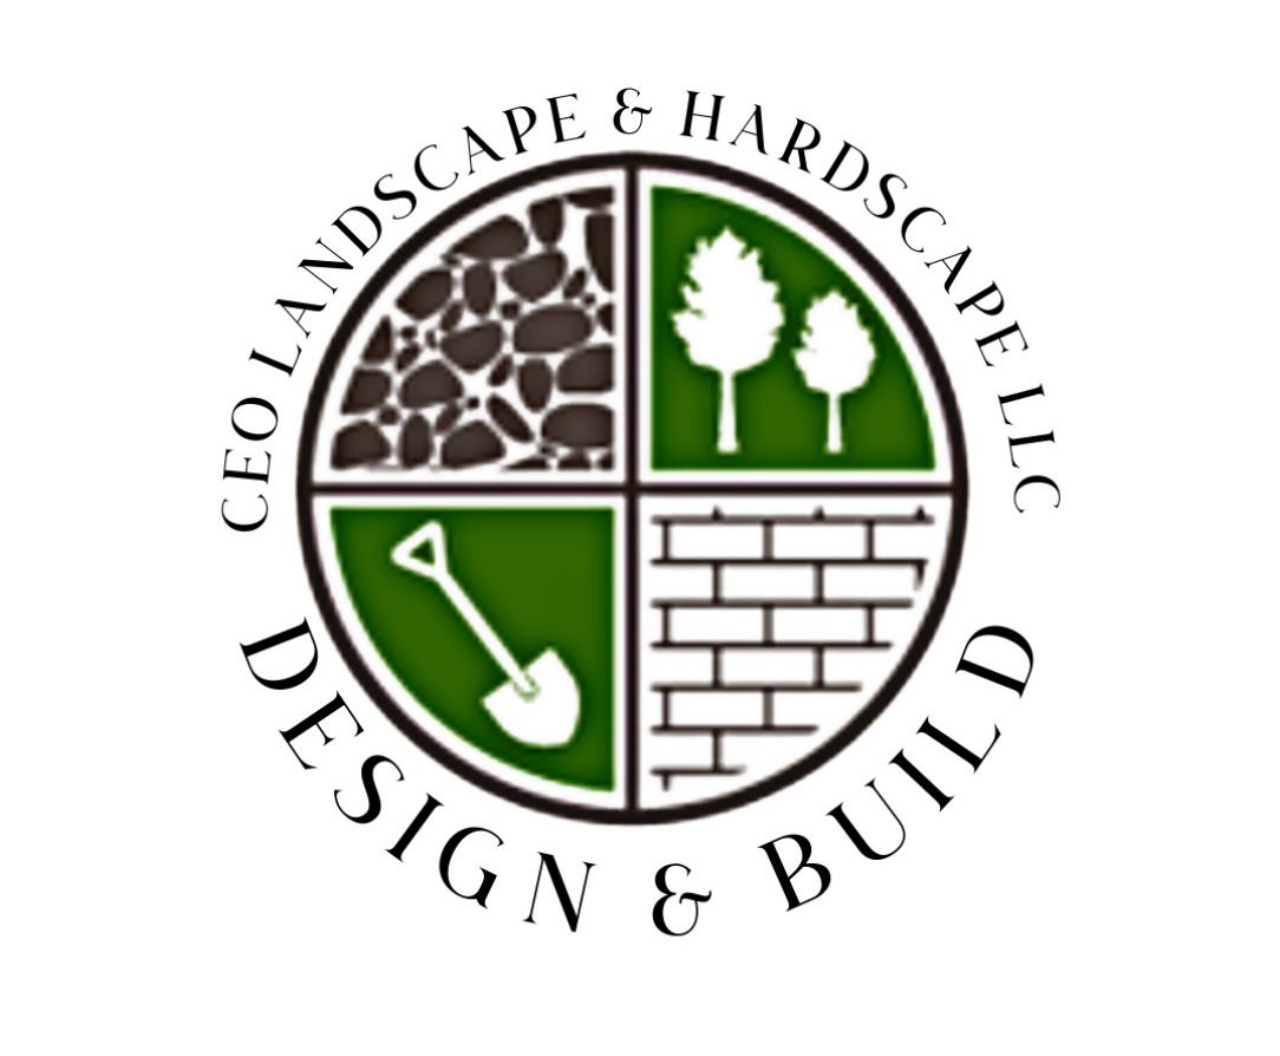 My BrandPage's logo